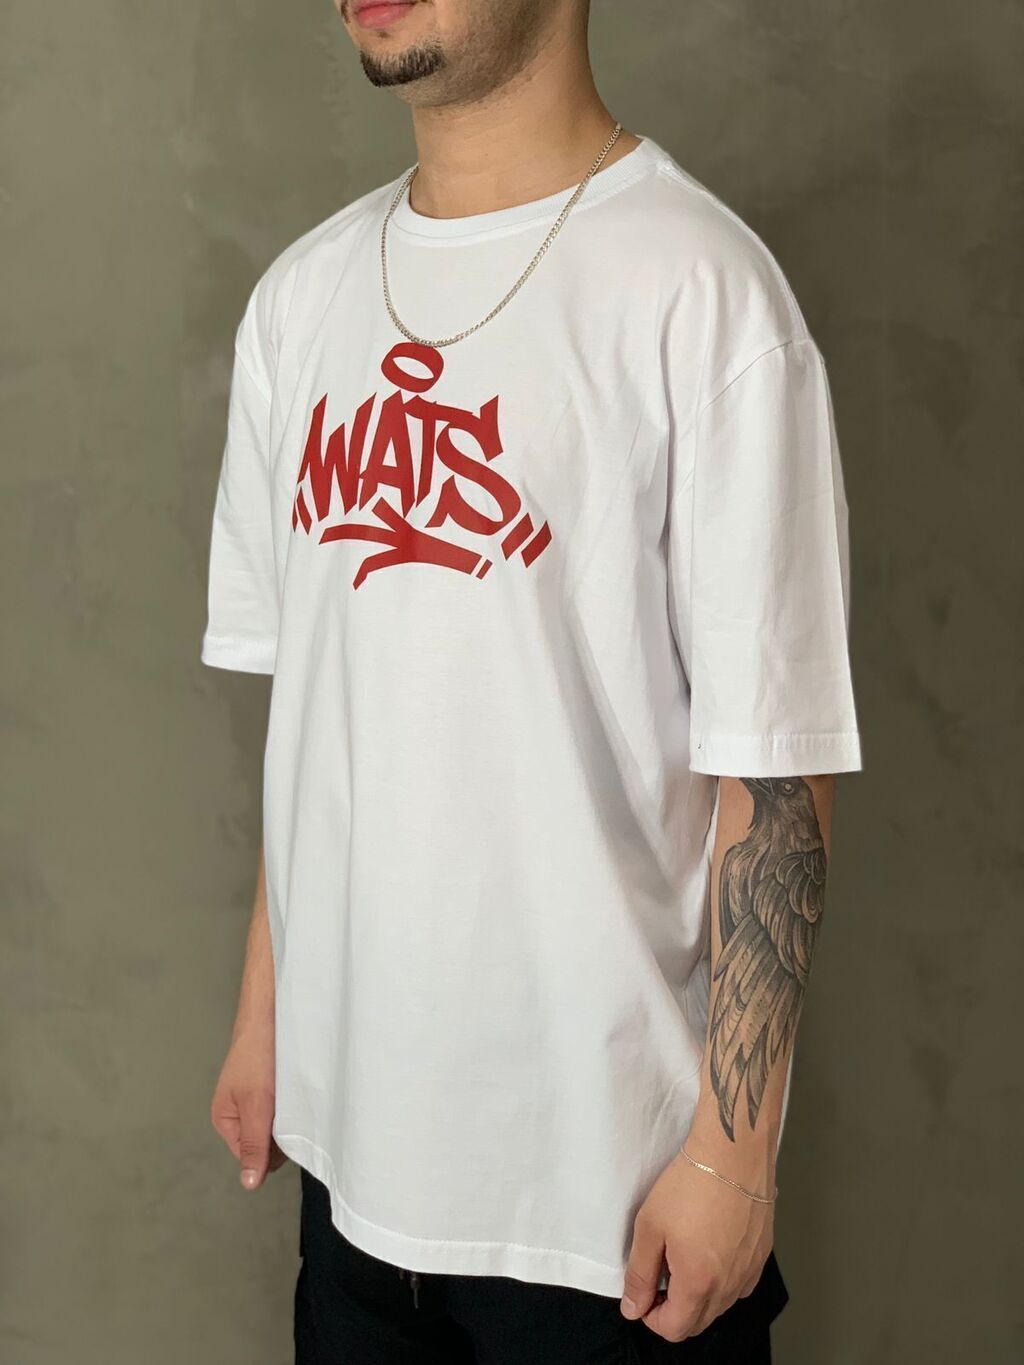 Camiseta Wats Tag Branca - Comprar em VIVA VIVAZZ